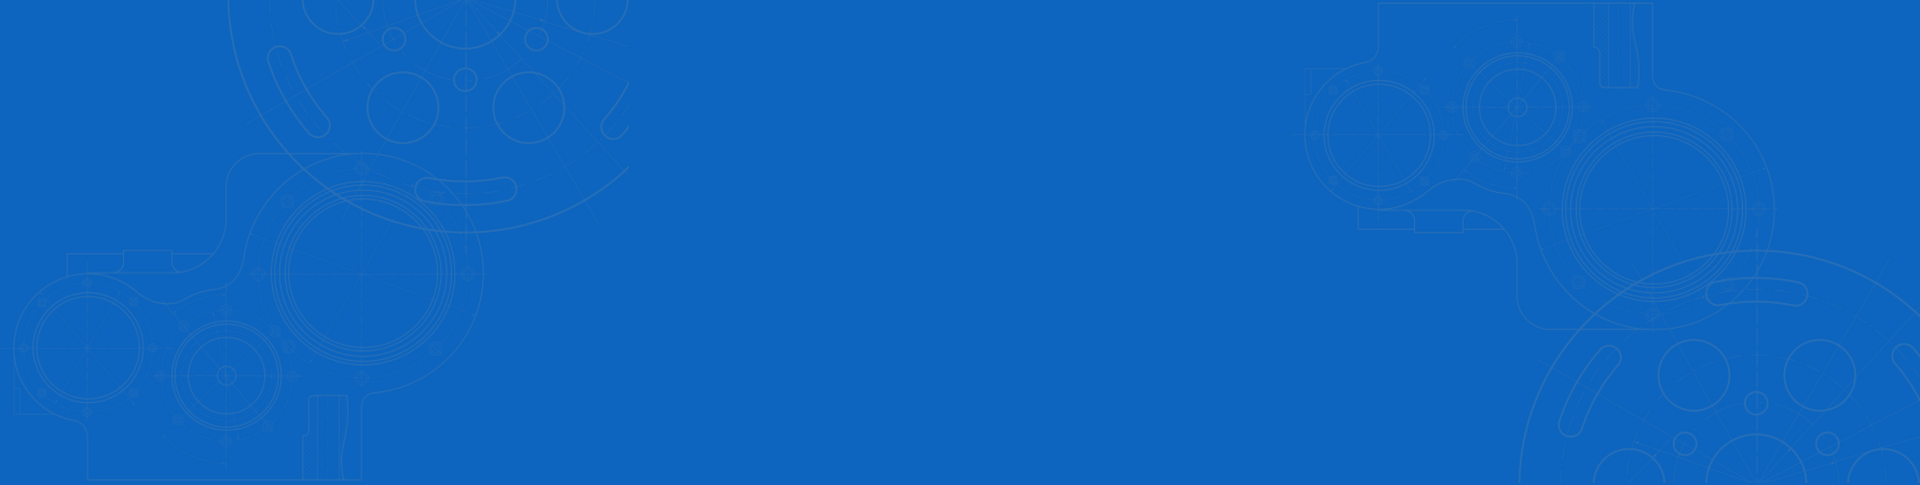 Amenities Blue Background | Kightlinger Auto Service